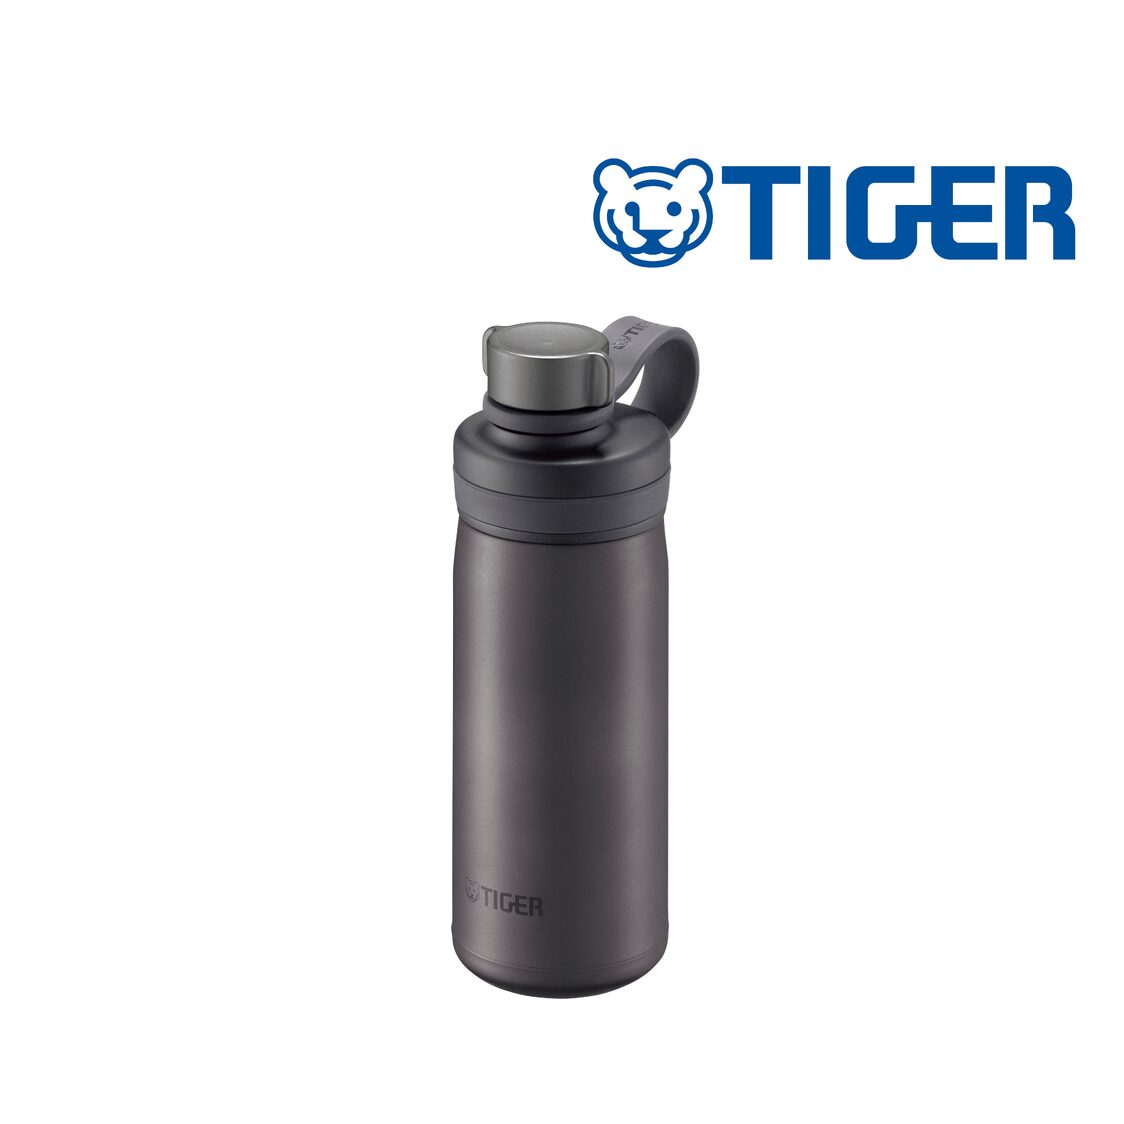 Tiger Stainless Steel Water Bottle Green - 800ml